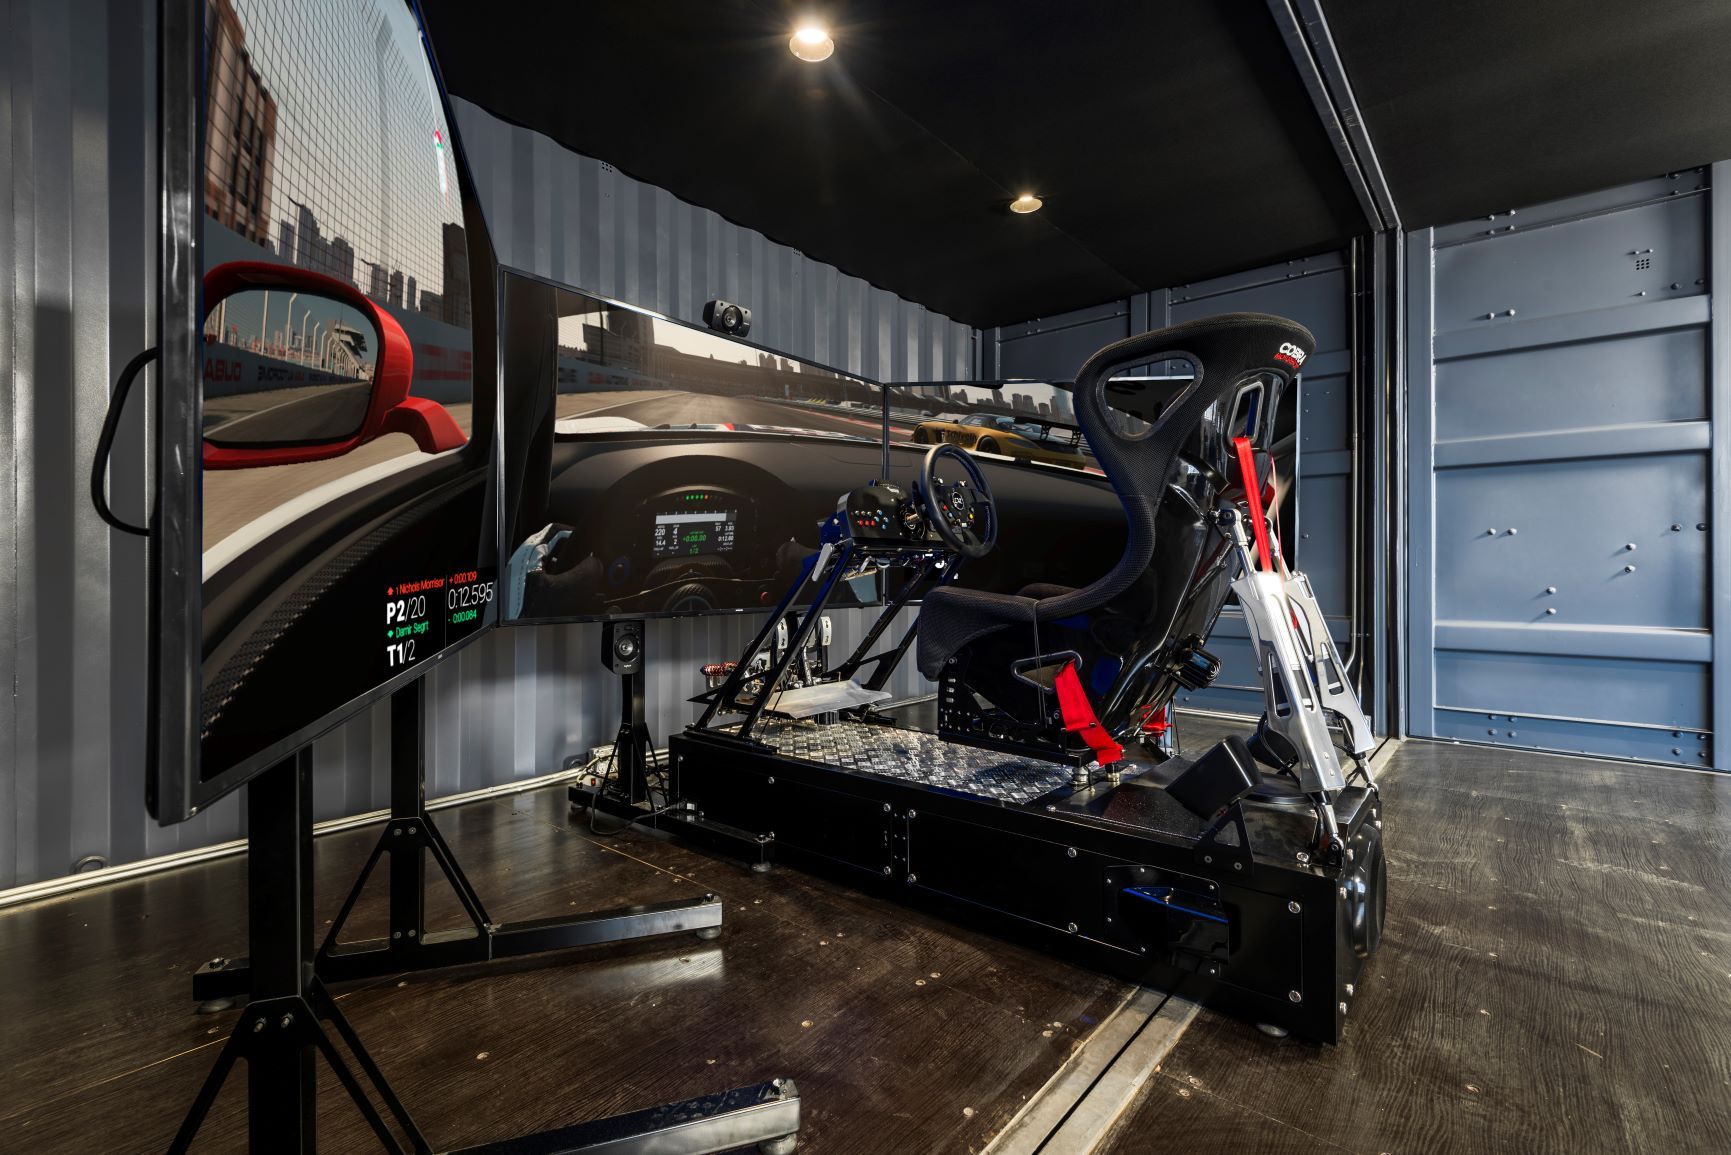 RennSeat Pro Home Racing Simulator Setup